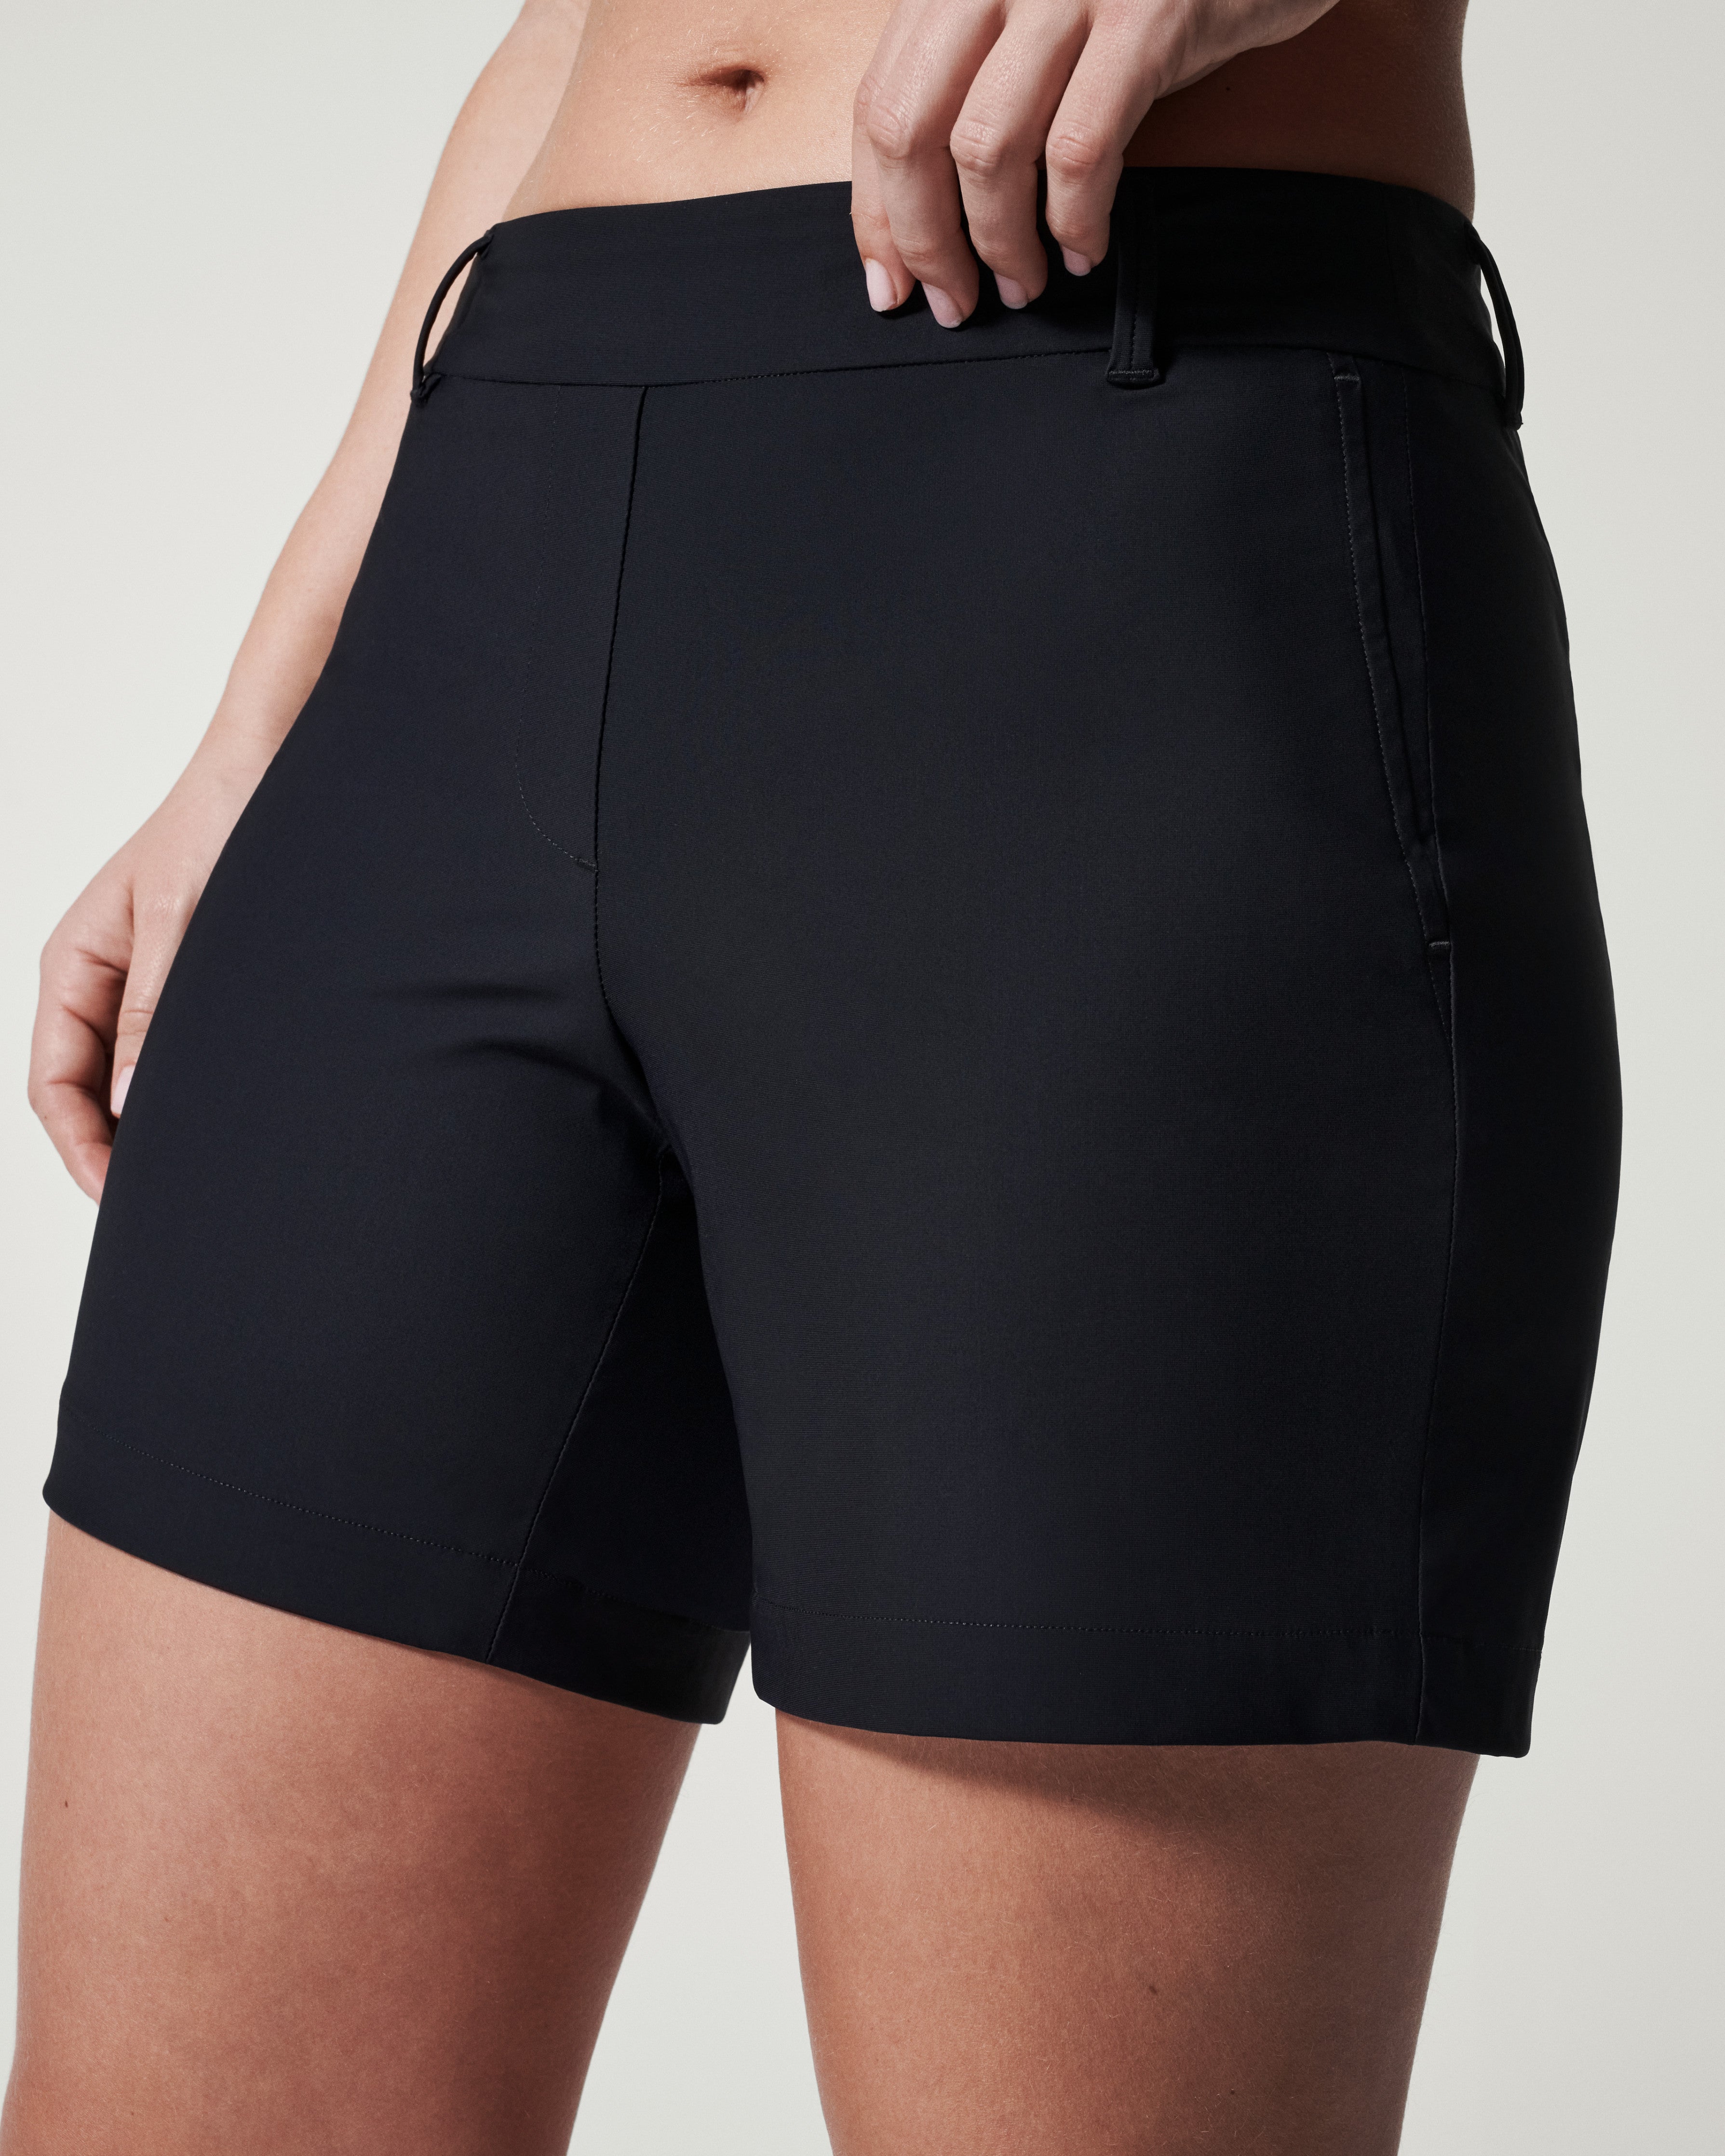 Nwot Spanx Black Shorts Size Xl - Gem